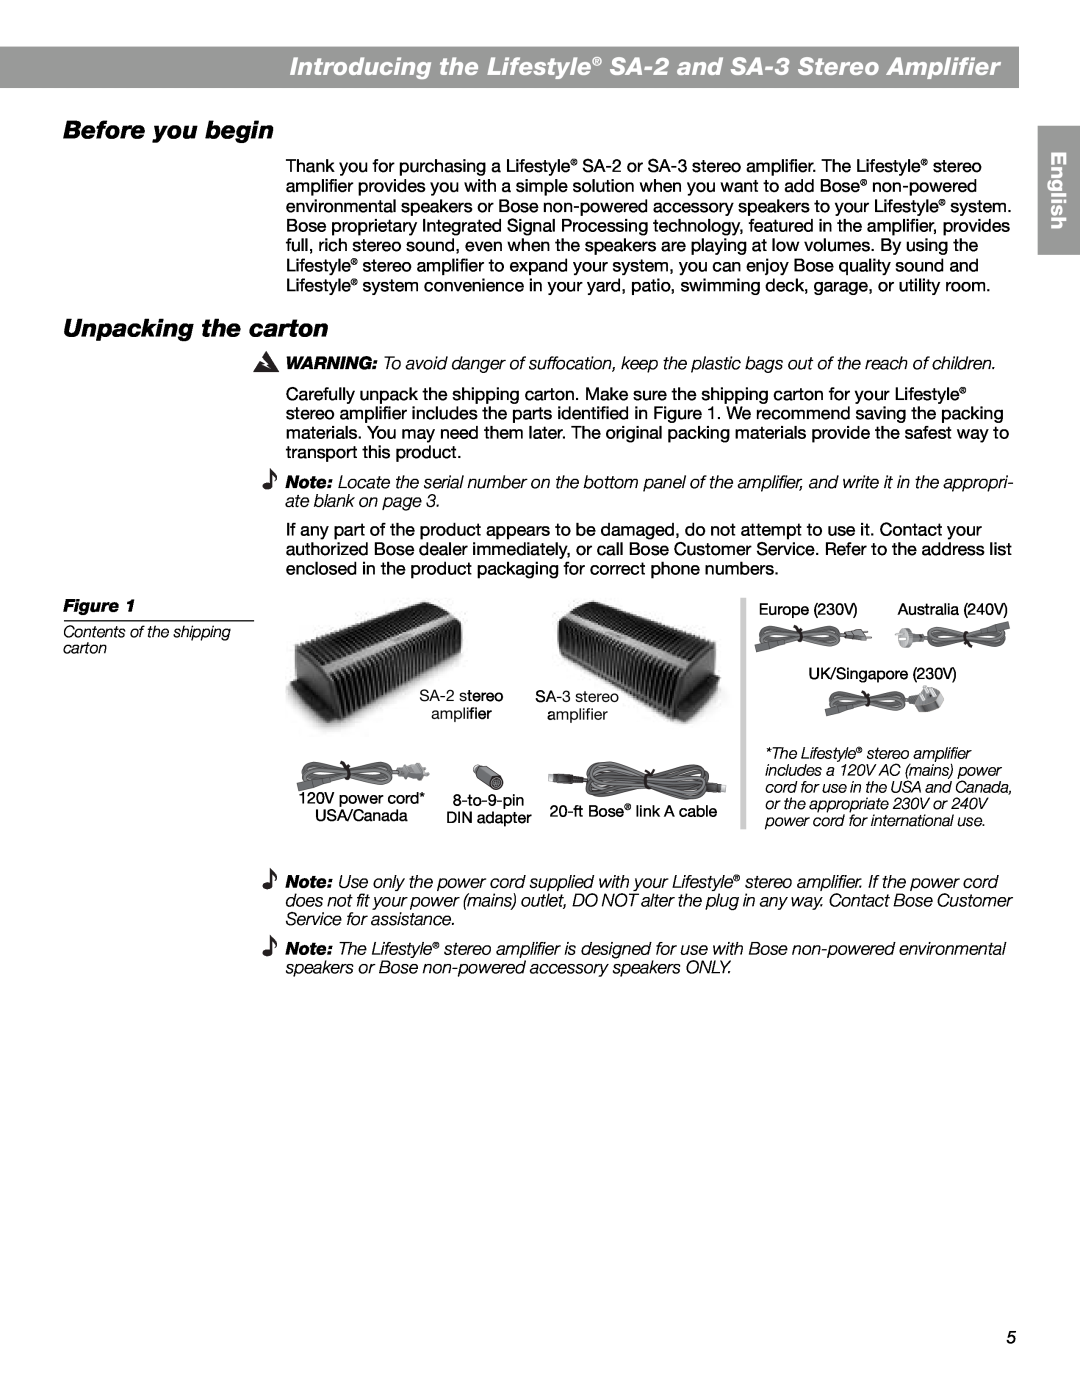 Bose manual Introducing the Lifestyle SA-2 and SA-3 Stereo Amplifier, Before you begin, Unpacking the carton, English 